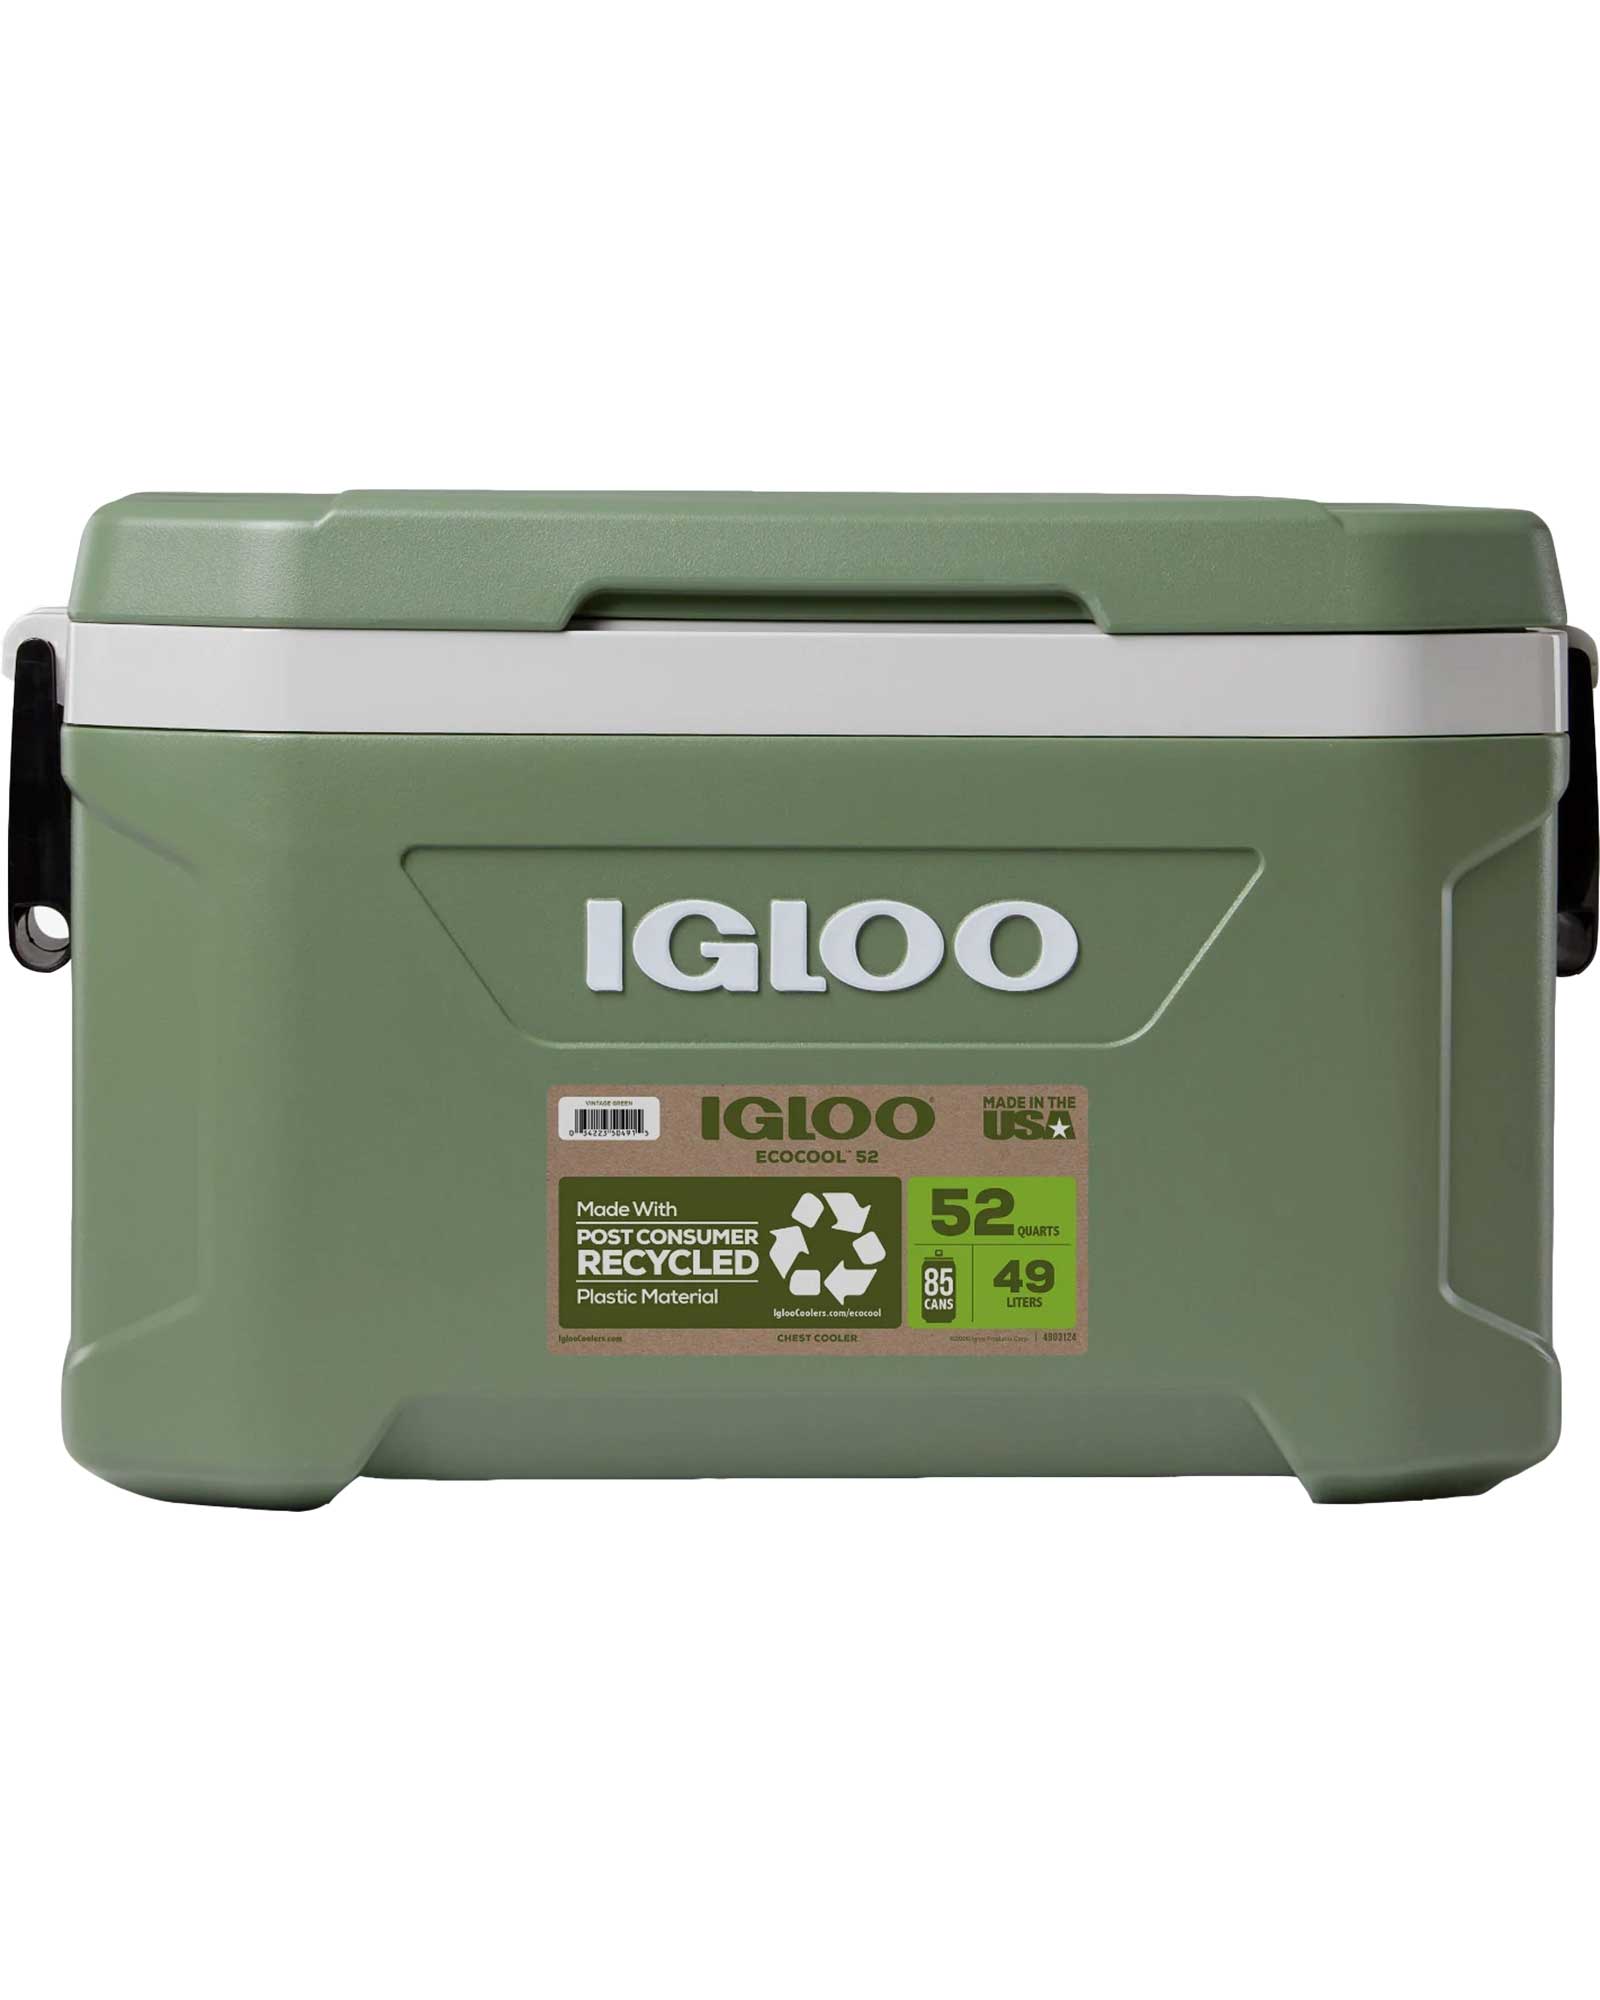 Igloo ECOCOOL Latitude 52 Qt Cooler - Vintage Green